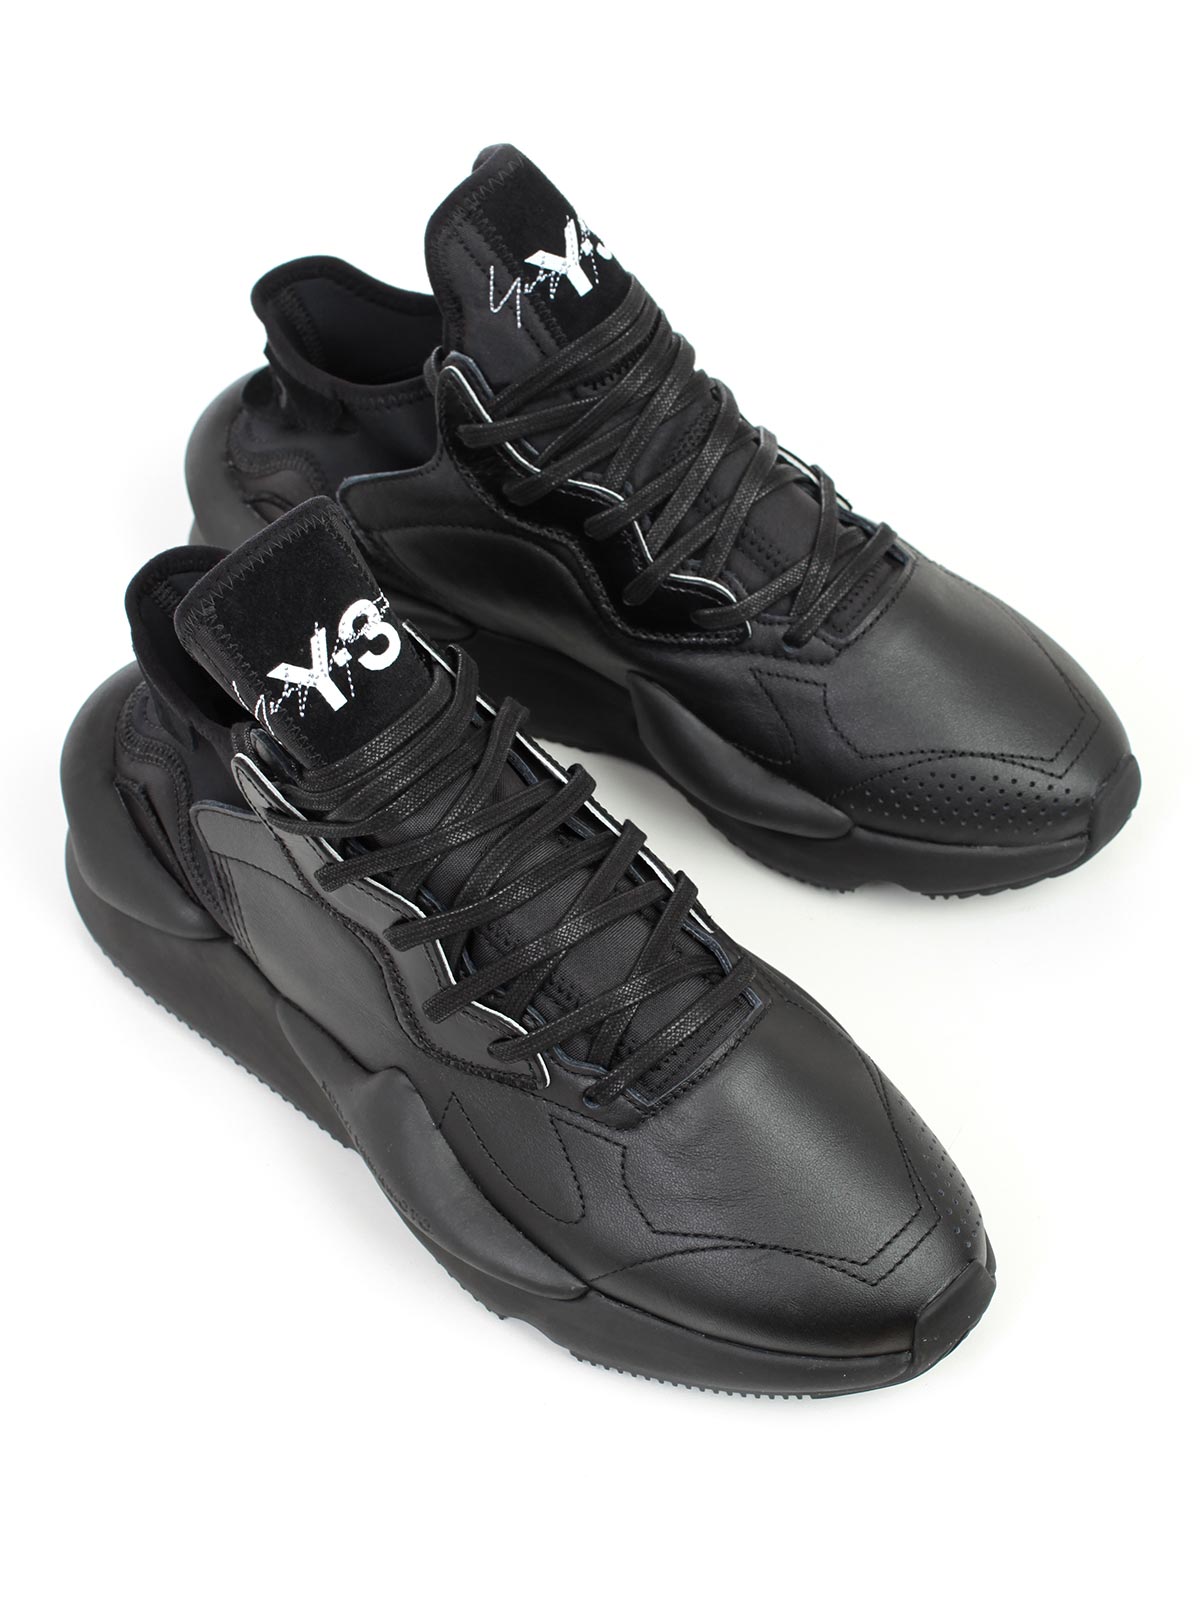 Y 3 мужской. Y-3 adidas Yohji Yamamoto. Yohji Yamamoto кроссовки y-3. Y3 adidas Yohji Yamamoto обувь. Adidas Yohji Yamamoto y-3 черные.